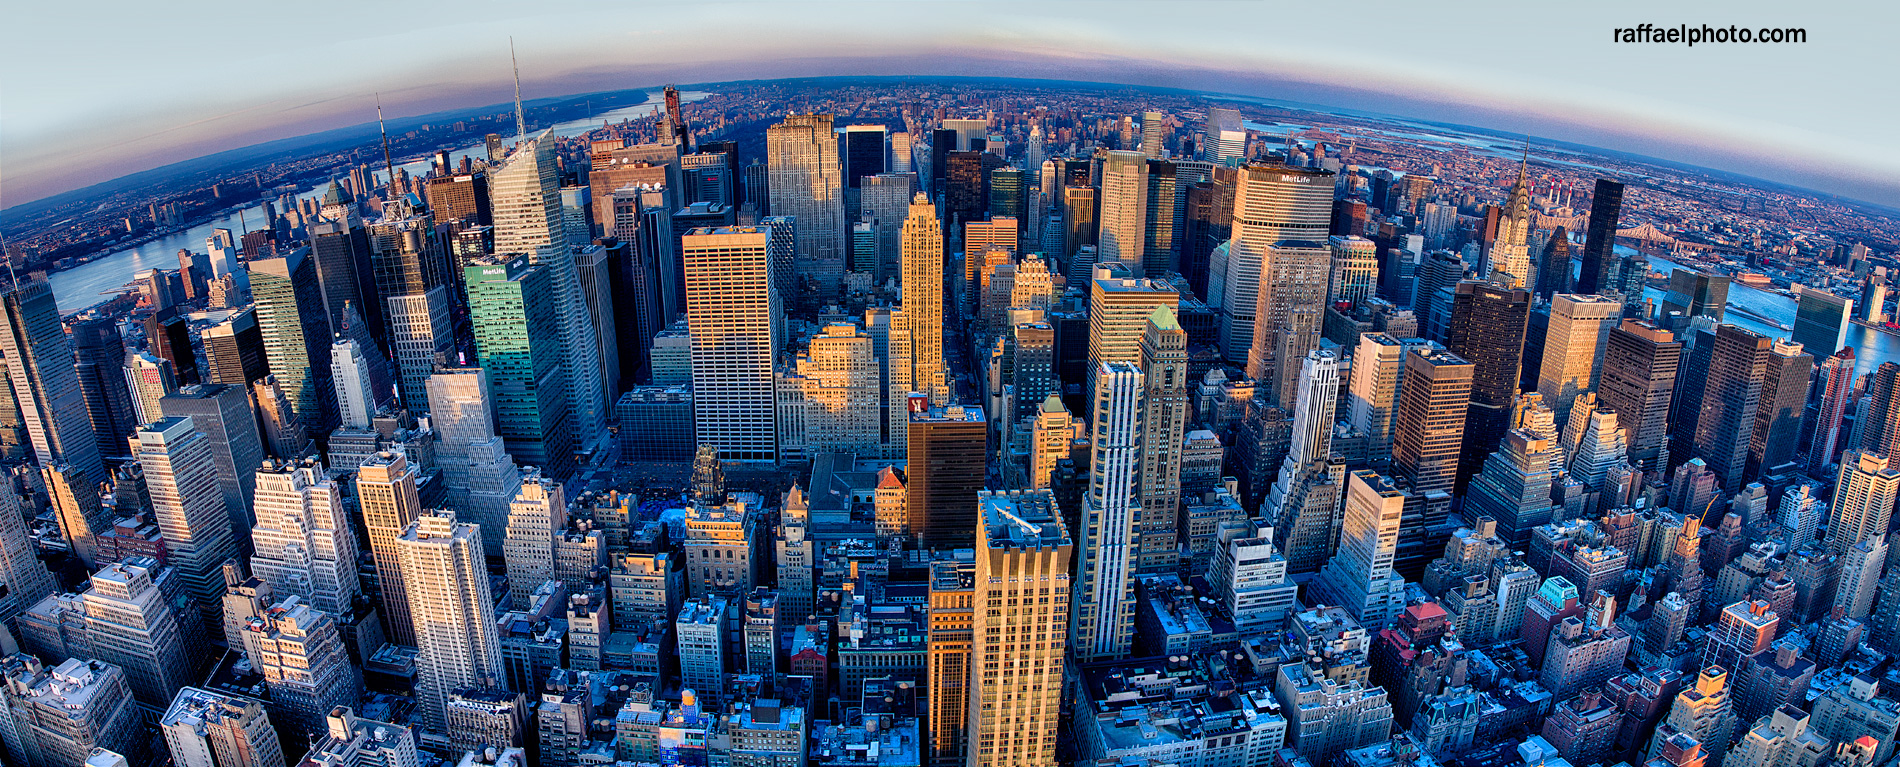 Photographing the New York Skyline - Raffael Dickreuter ...